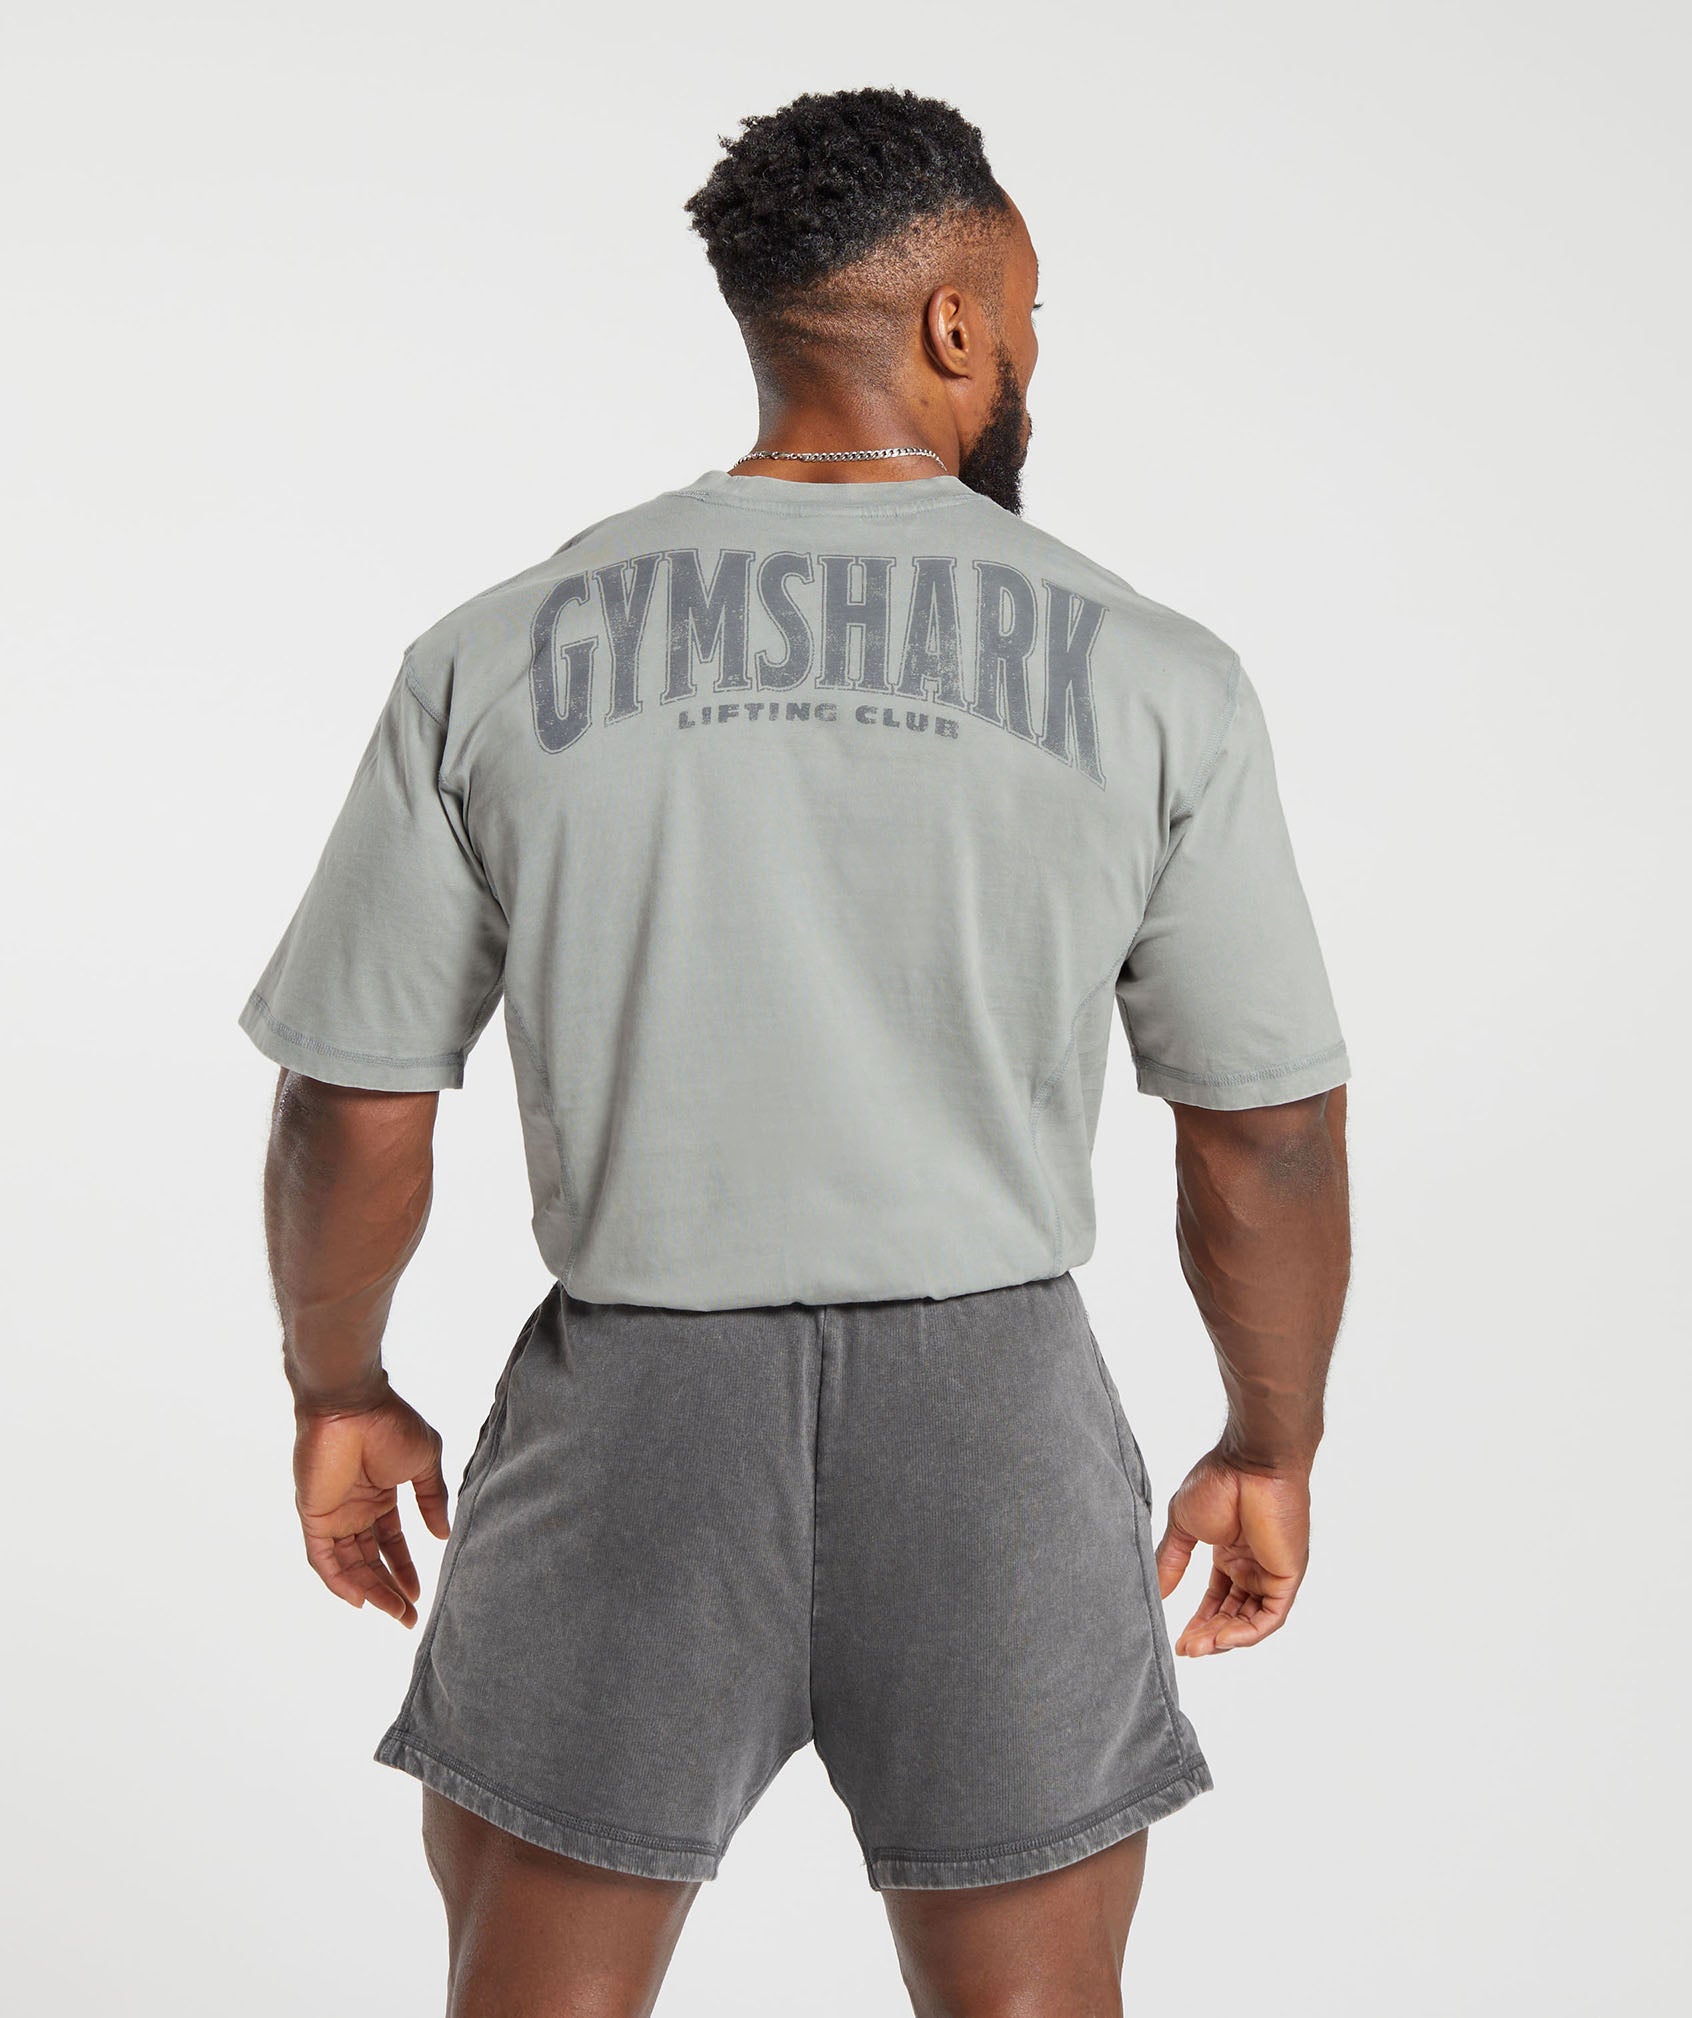 Gymshark Lifting Club T-Shirt - Capri Blue